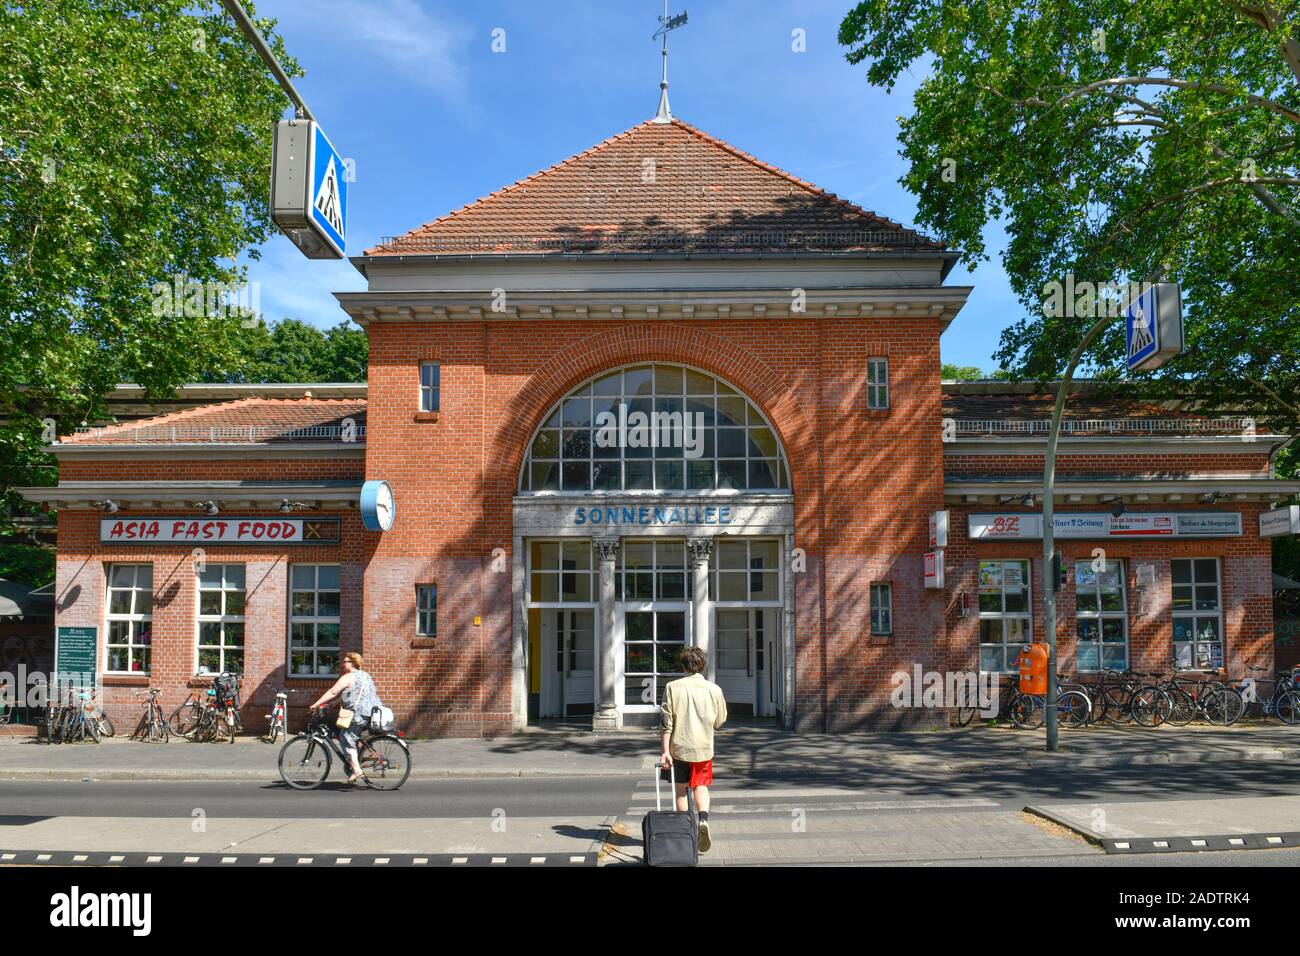 Bahnhof, Sonnenallee Neukölln, Berlin, Deutschland Banque D'Images